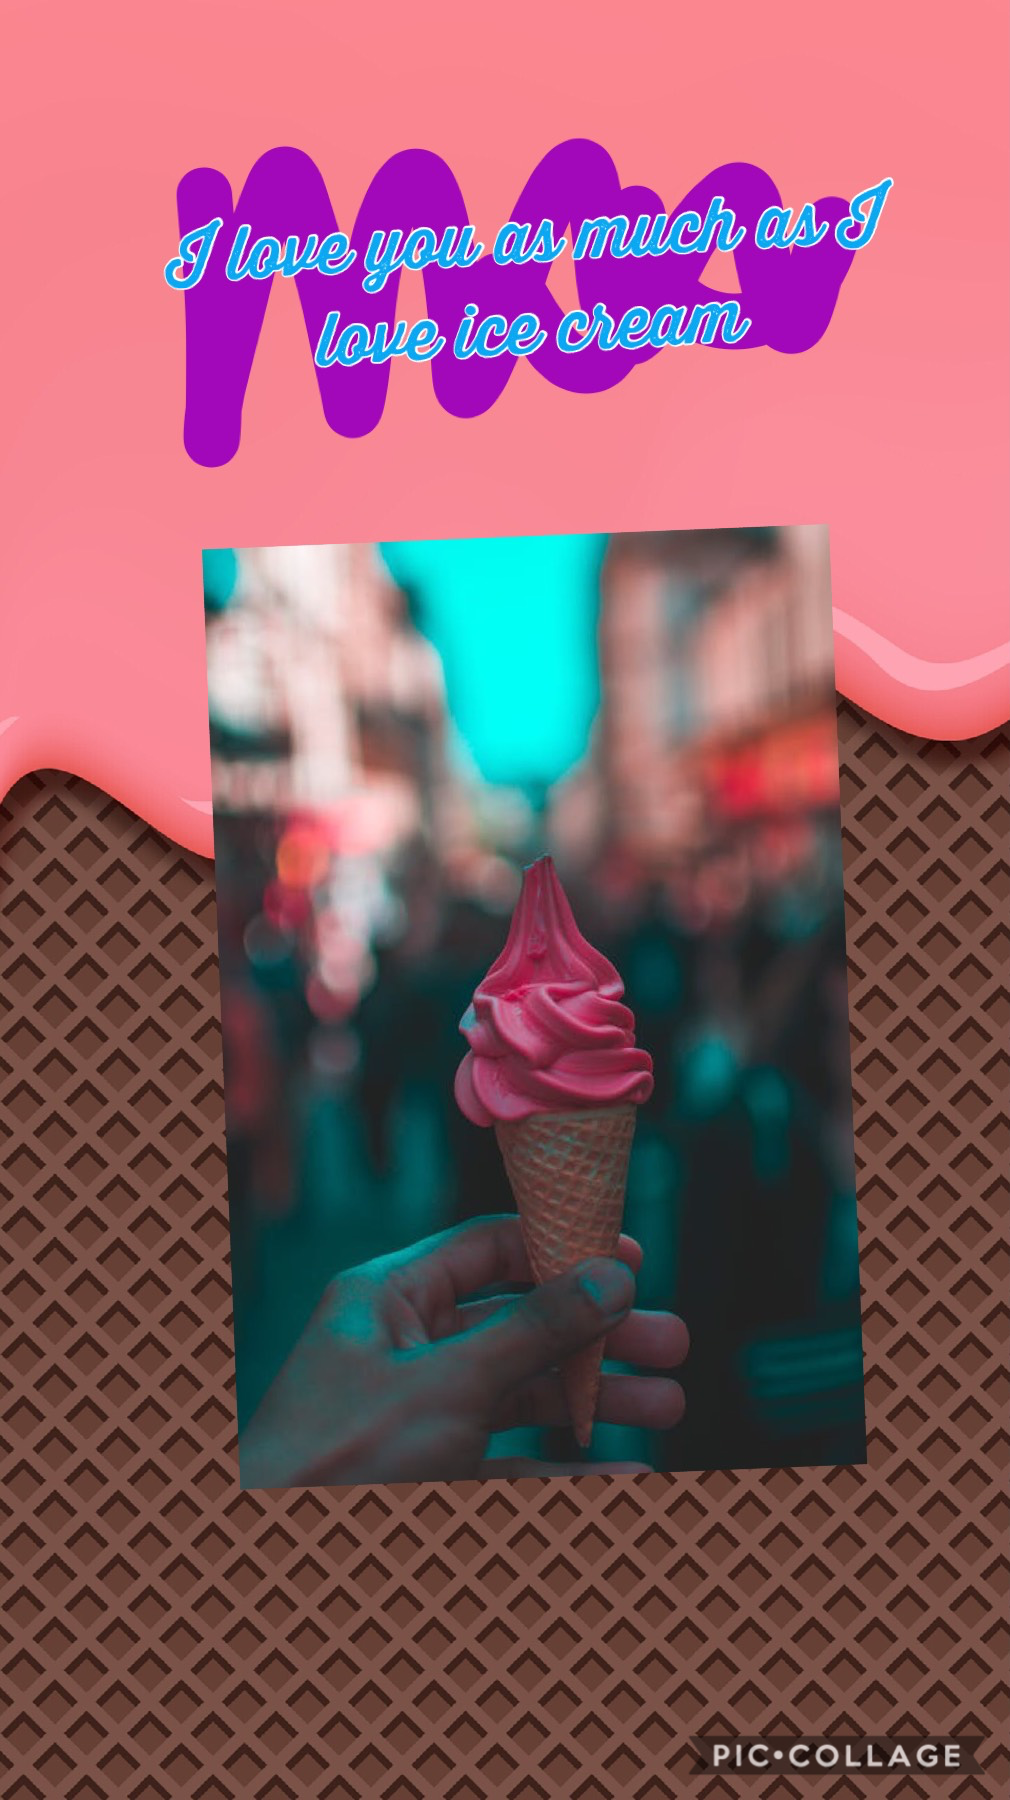 Ice cream 🍦 